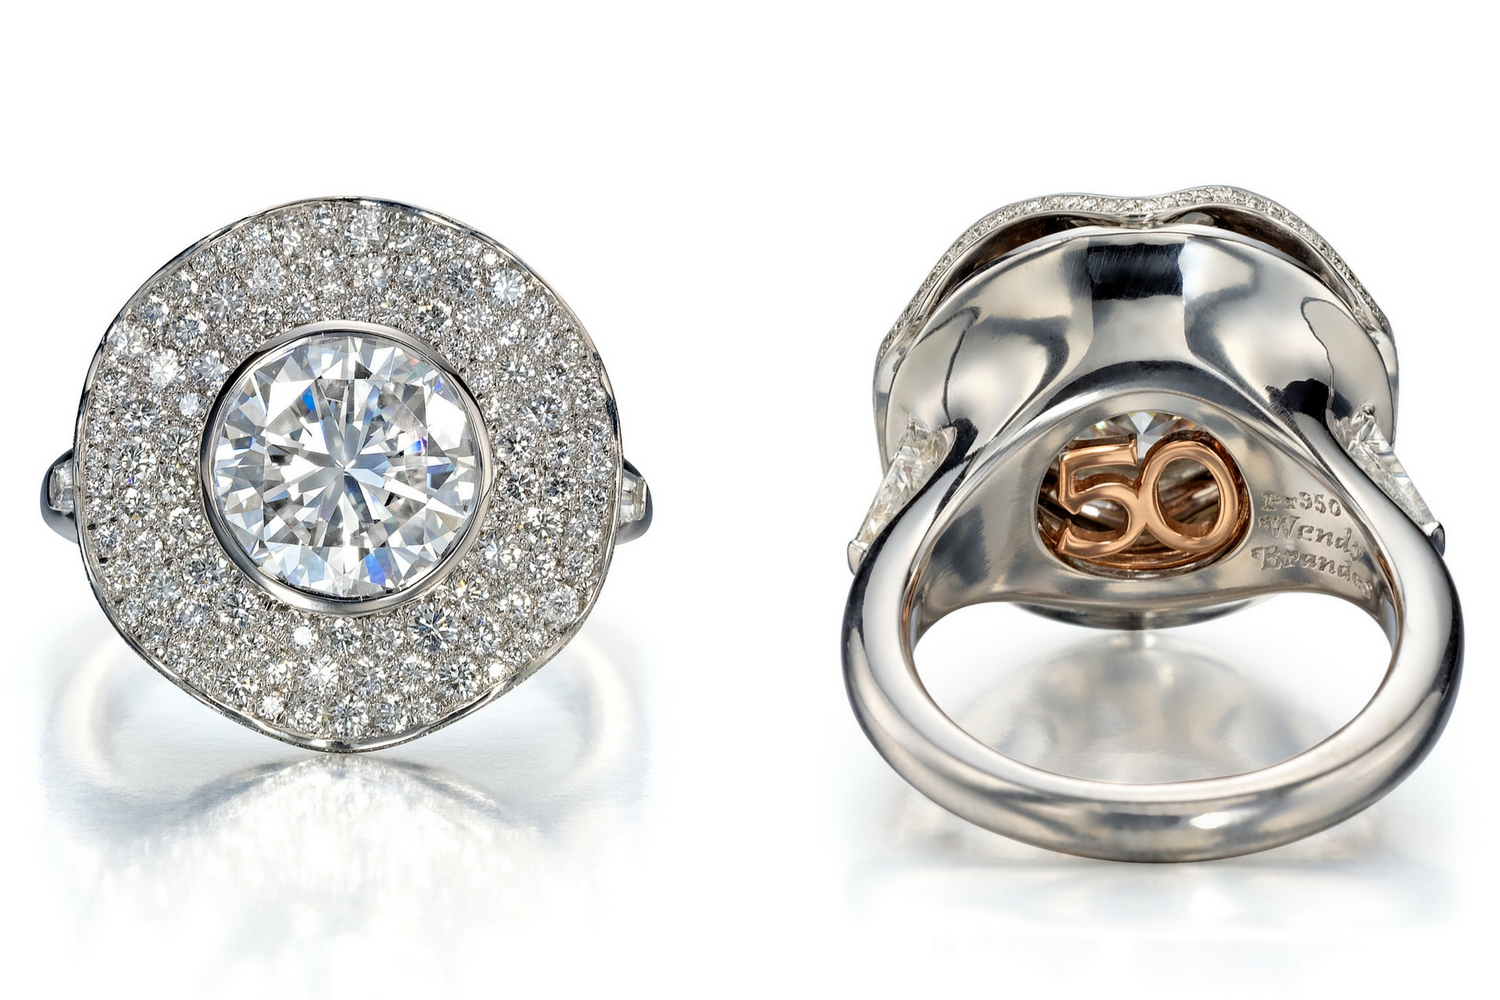 Ballerina-Style Ring with 199 diamonds and round diamond center